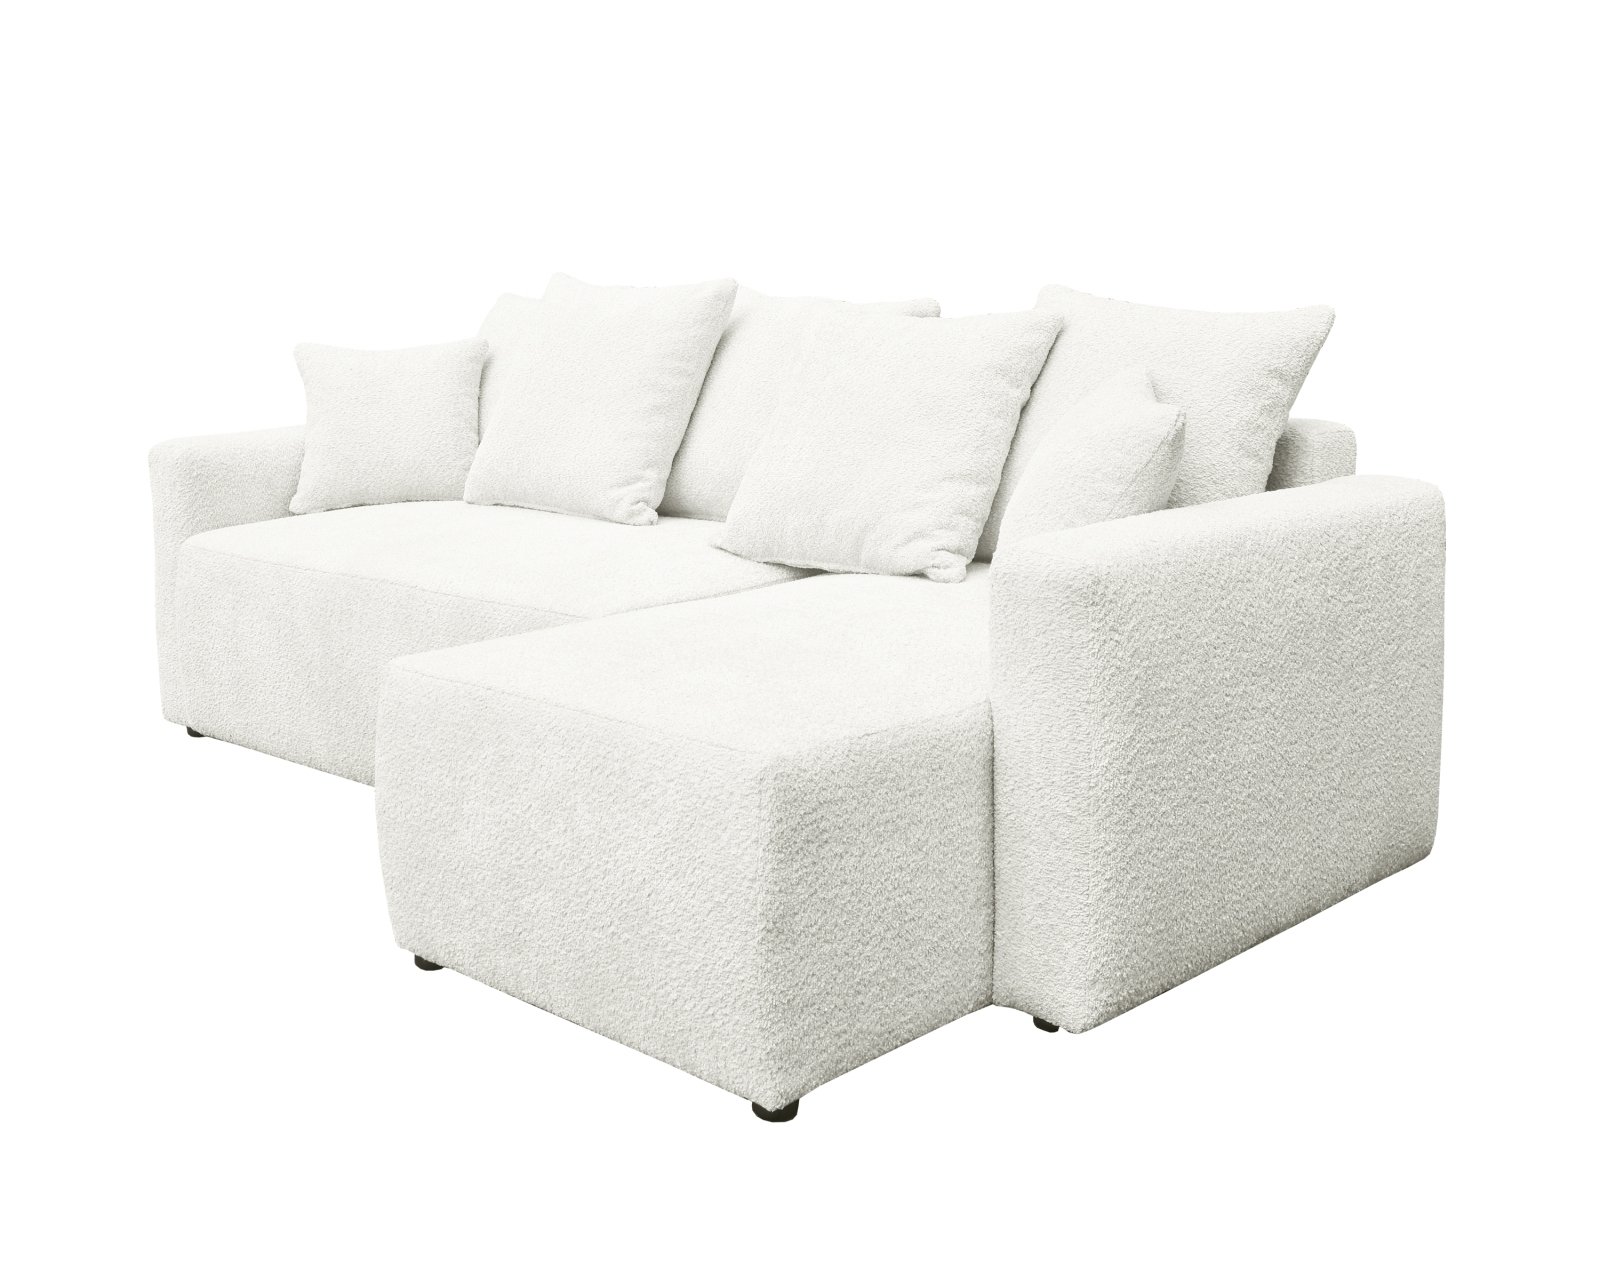 Canapé blanc en tissu polyester imitation fourrure Aurora 142 x 65